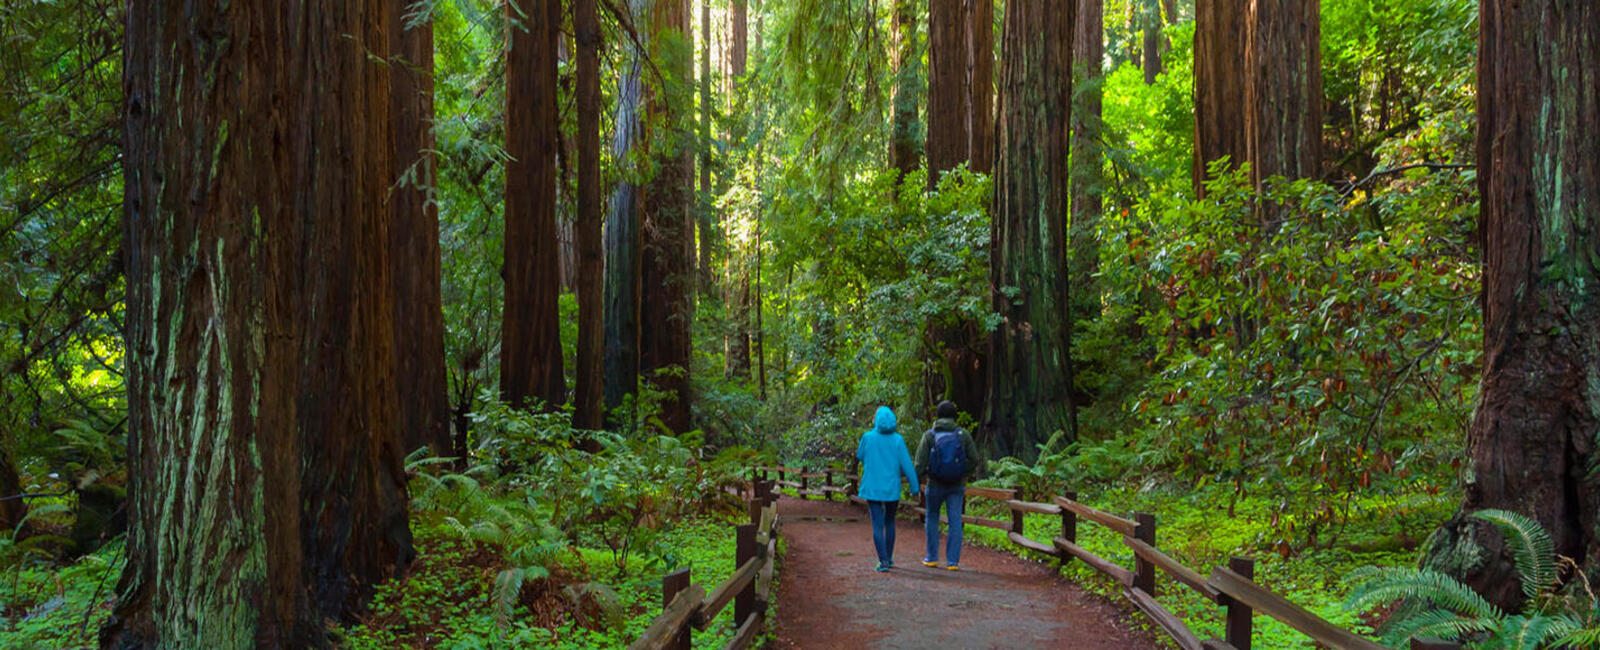 Two people walking among large redwood trees in Muir Woods.